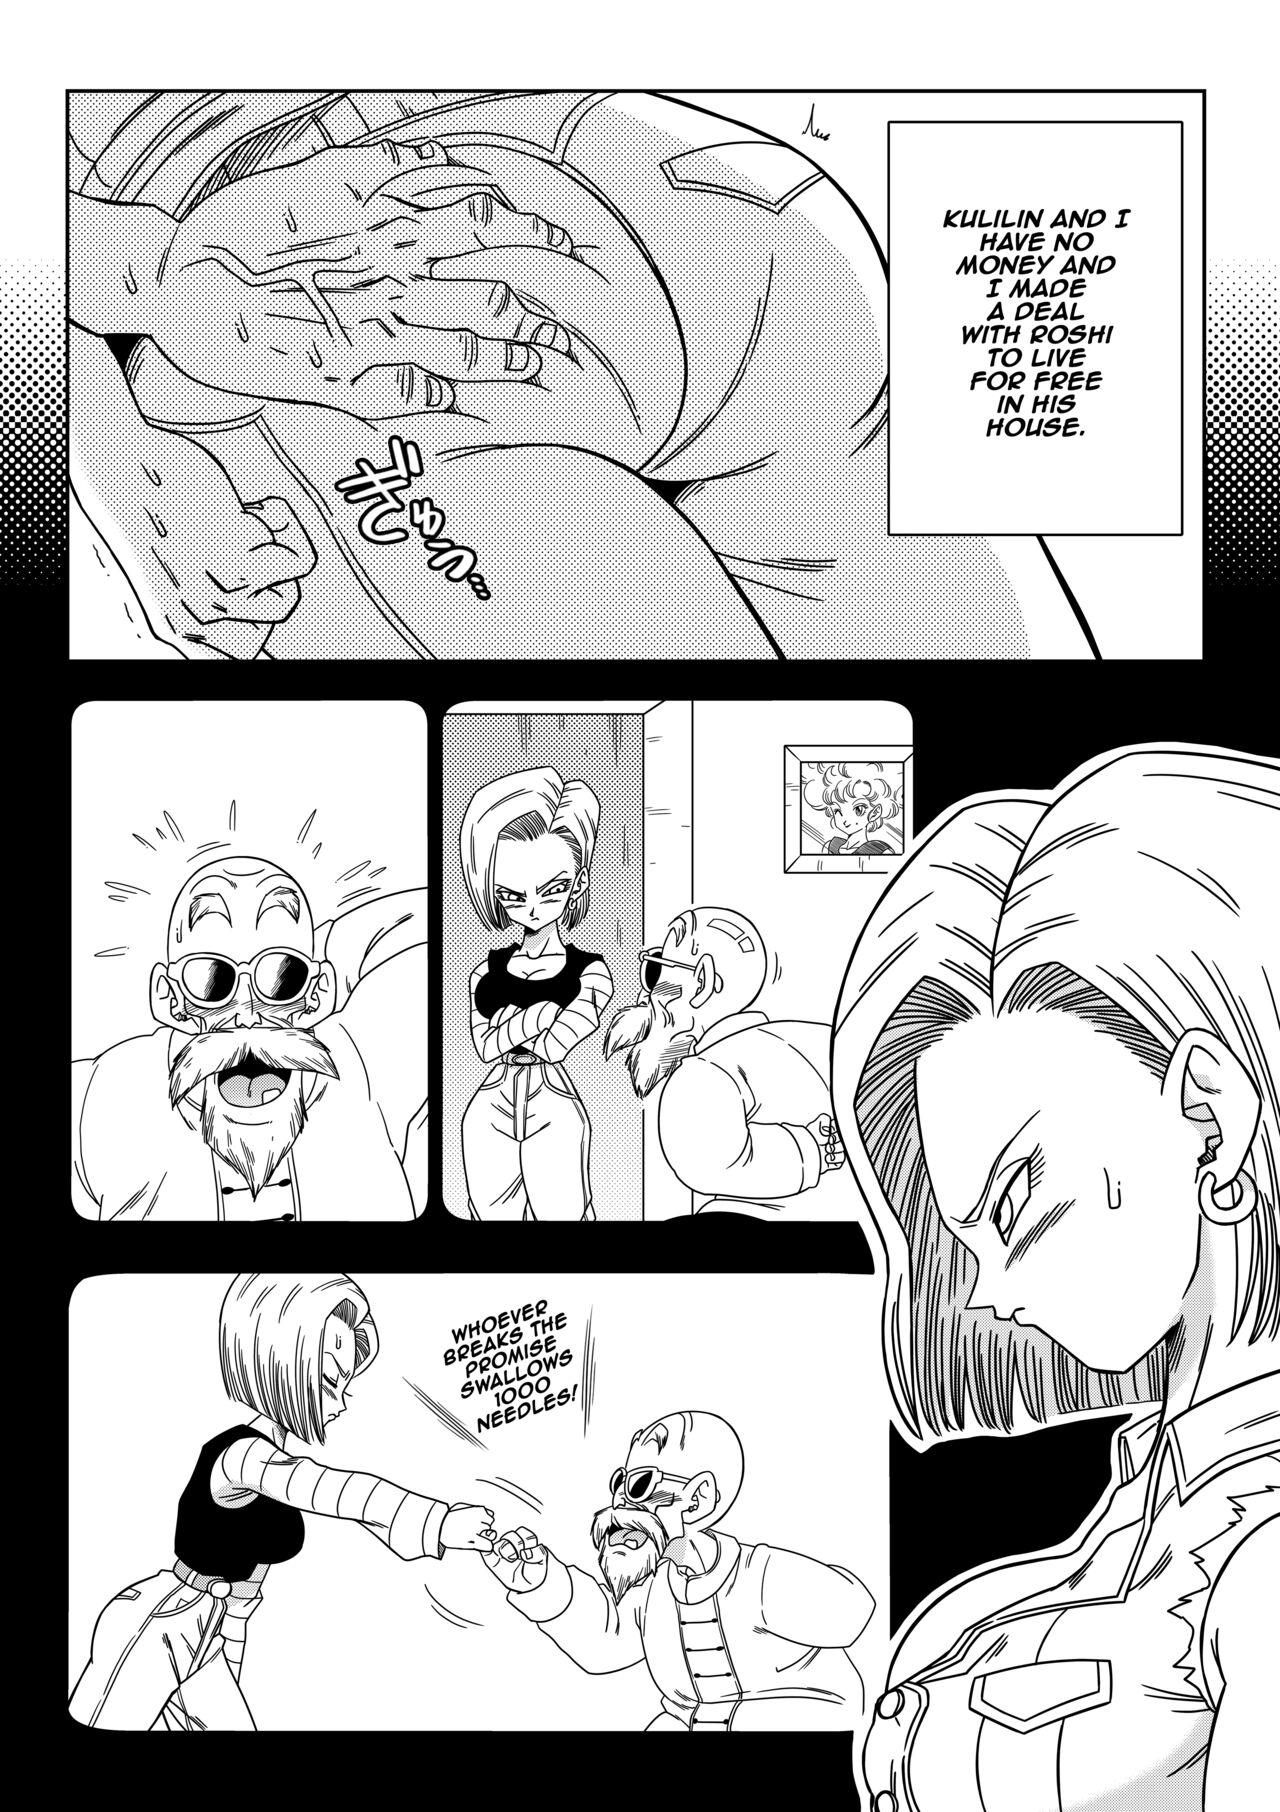 Oriental Android 18 vs Master Roshi - Dragon ball z Dragon ball Chicks - Page 3